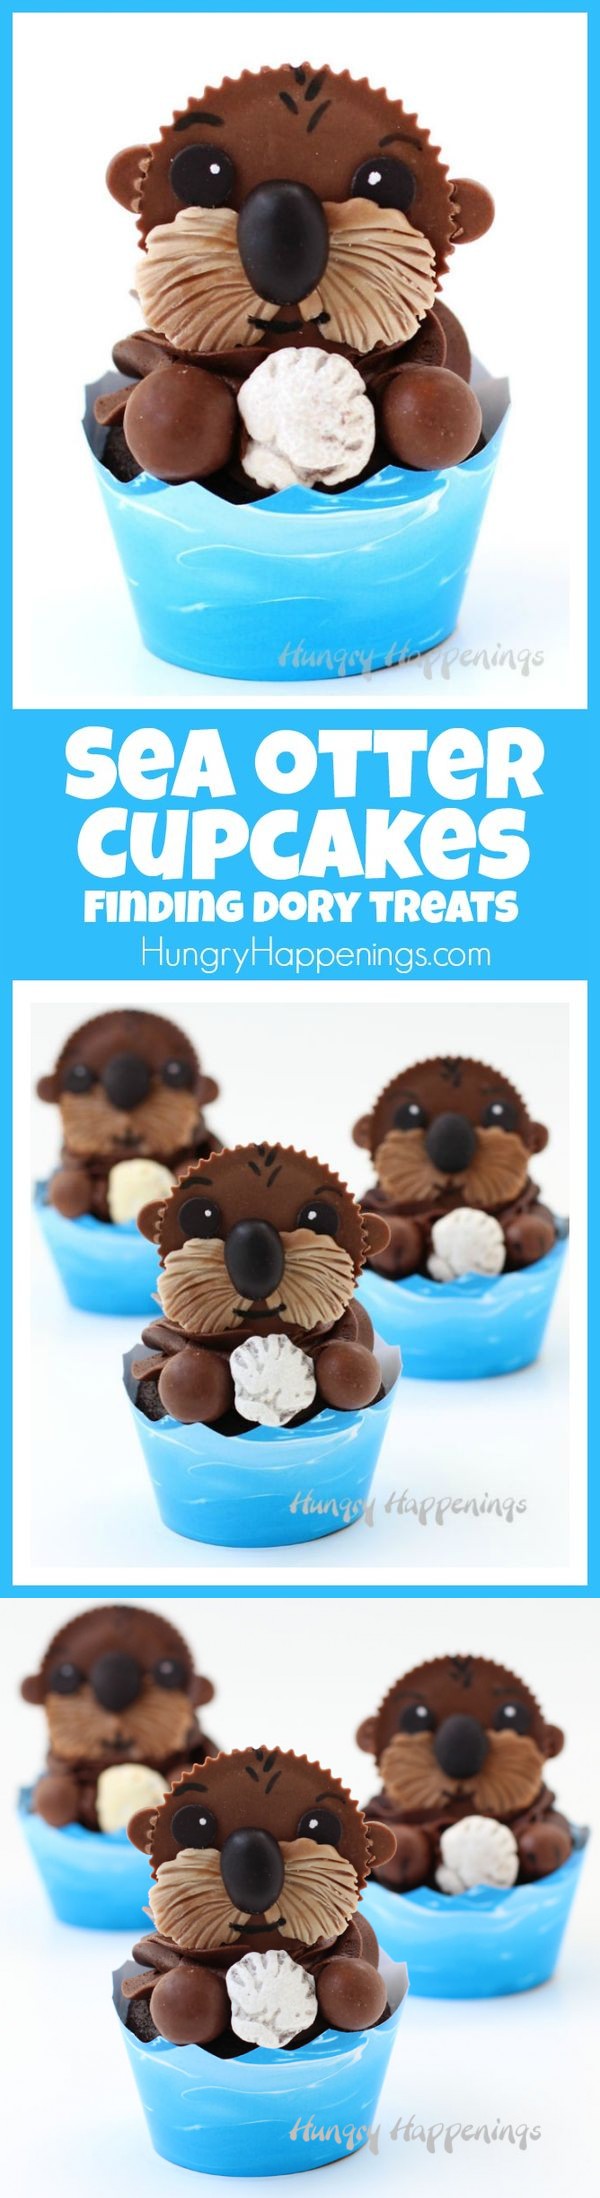 Sea Otter Cupcakes - Finding Dory Treats